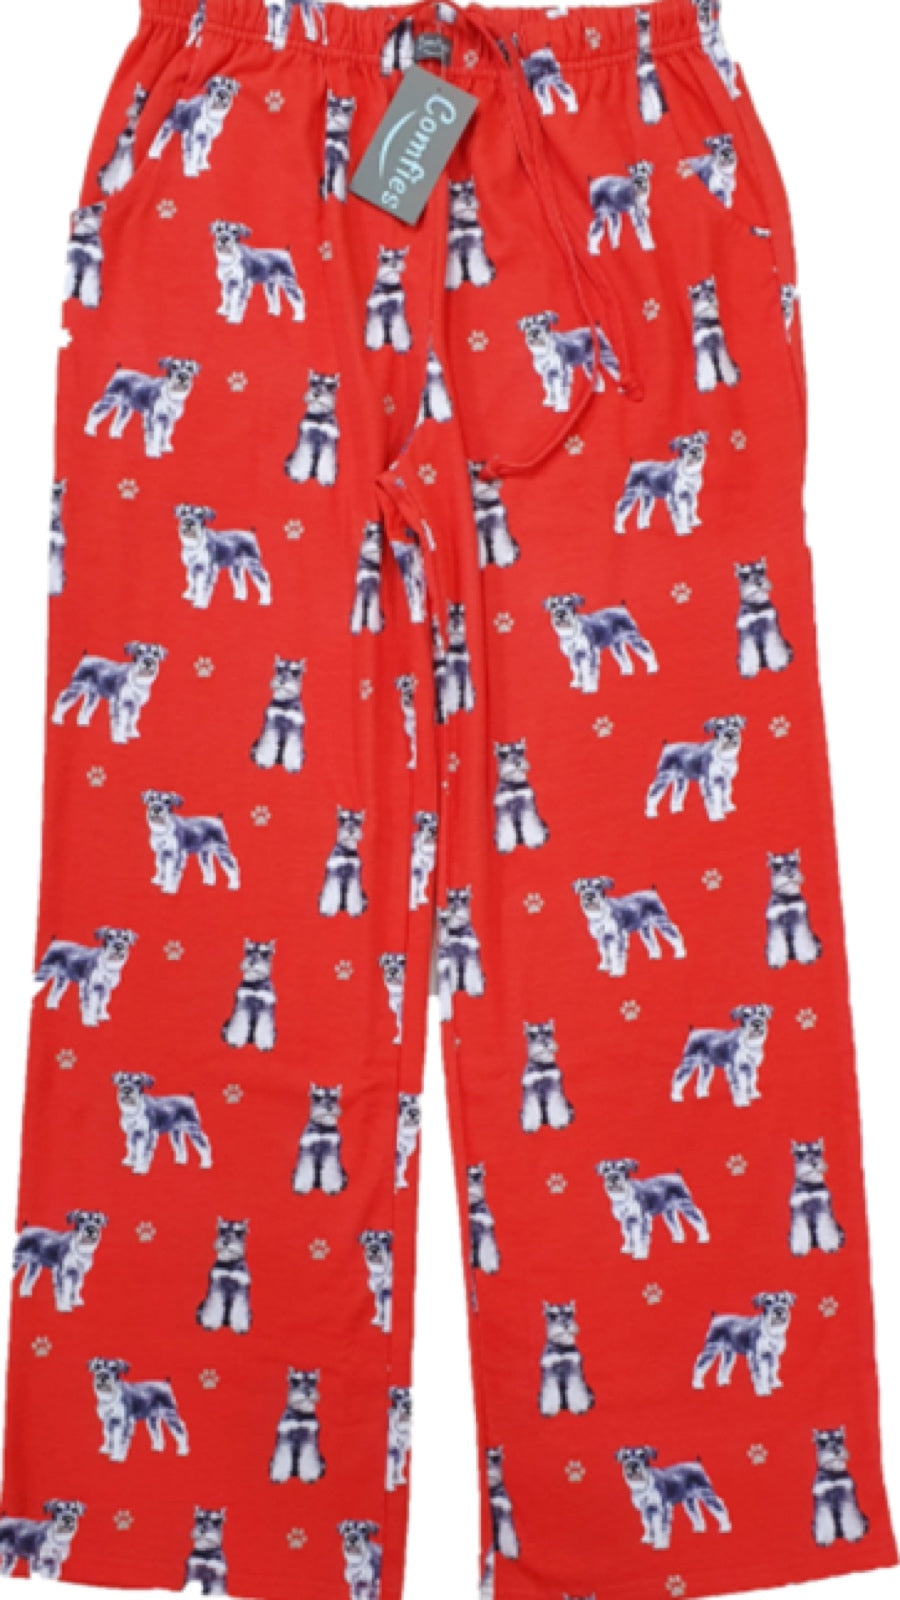 E & S Imports Women's Corgi Dog Lounge Pants - Pajama Pants Pajama Bottom